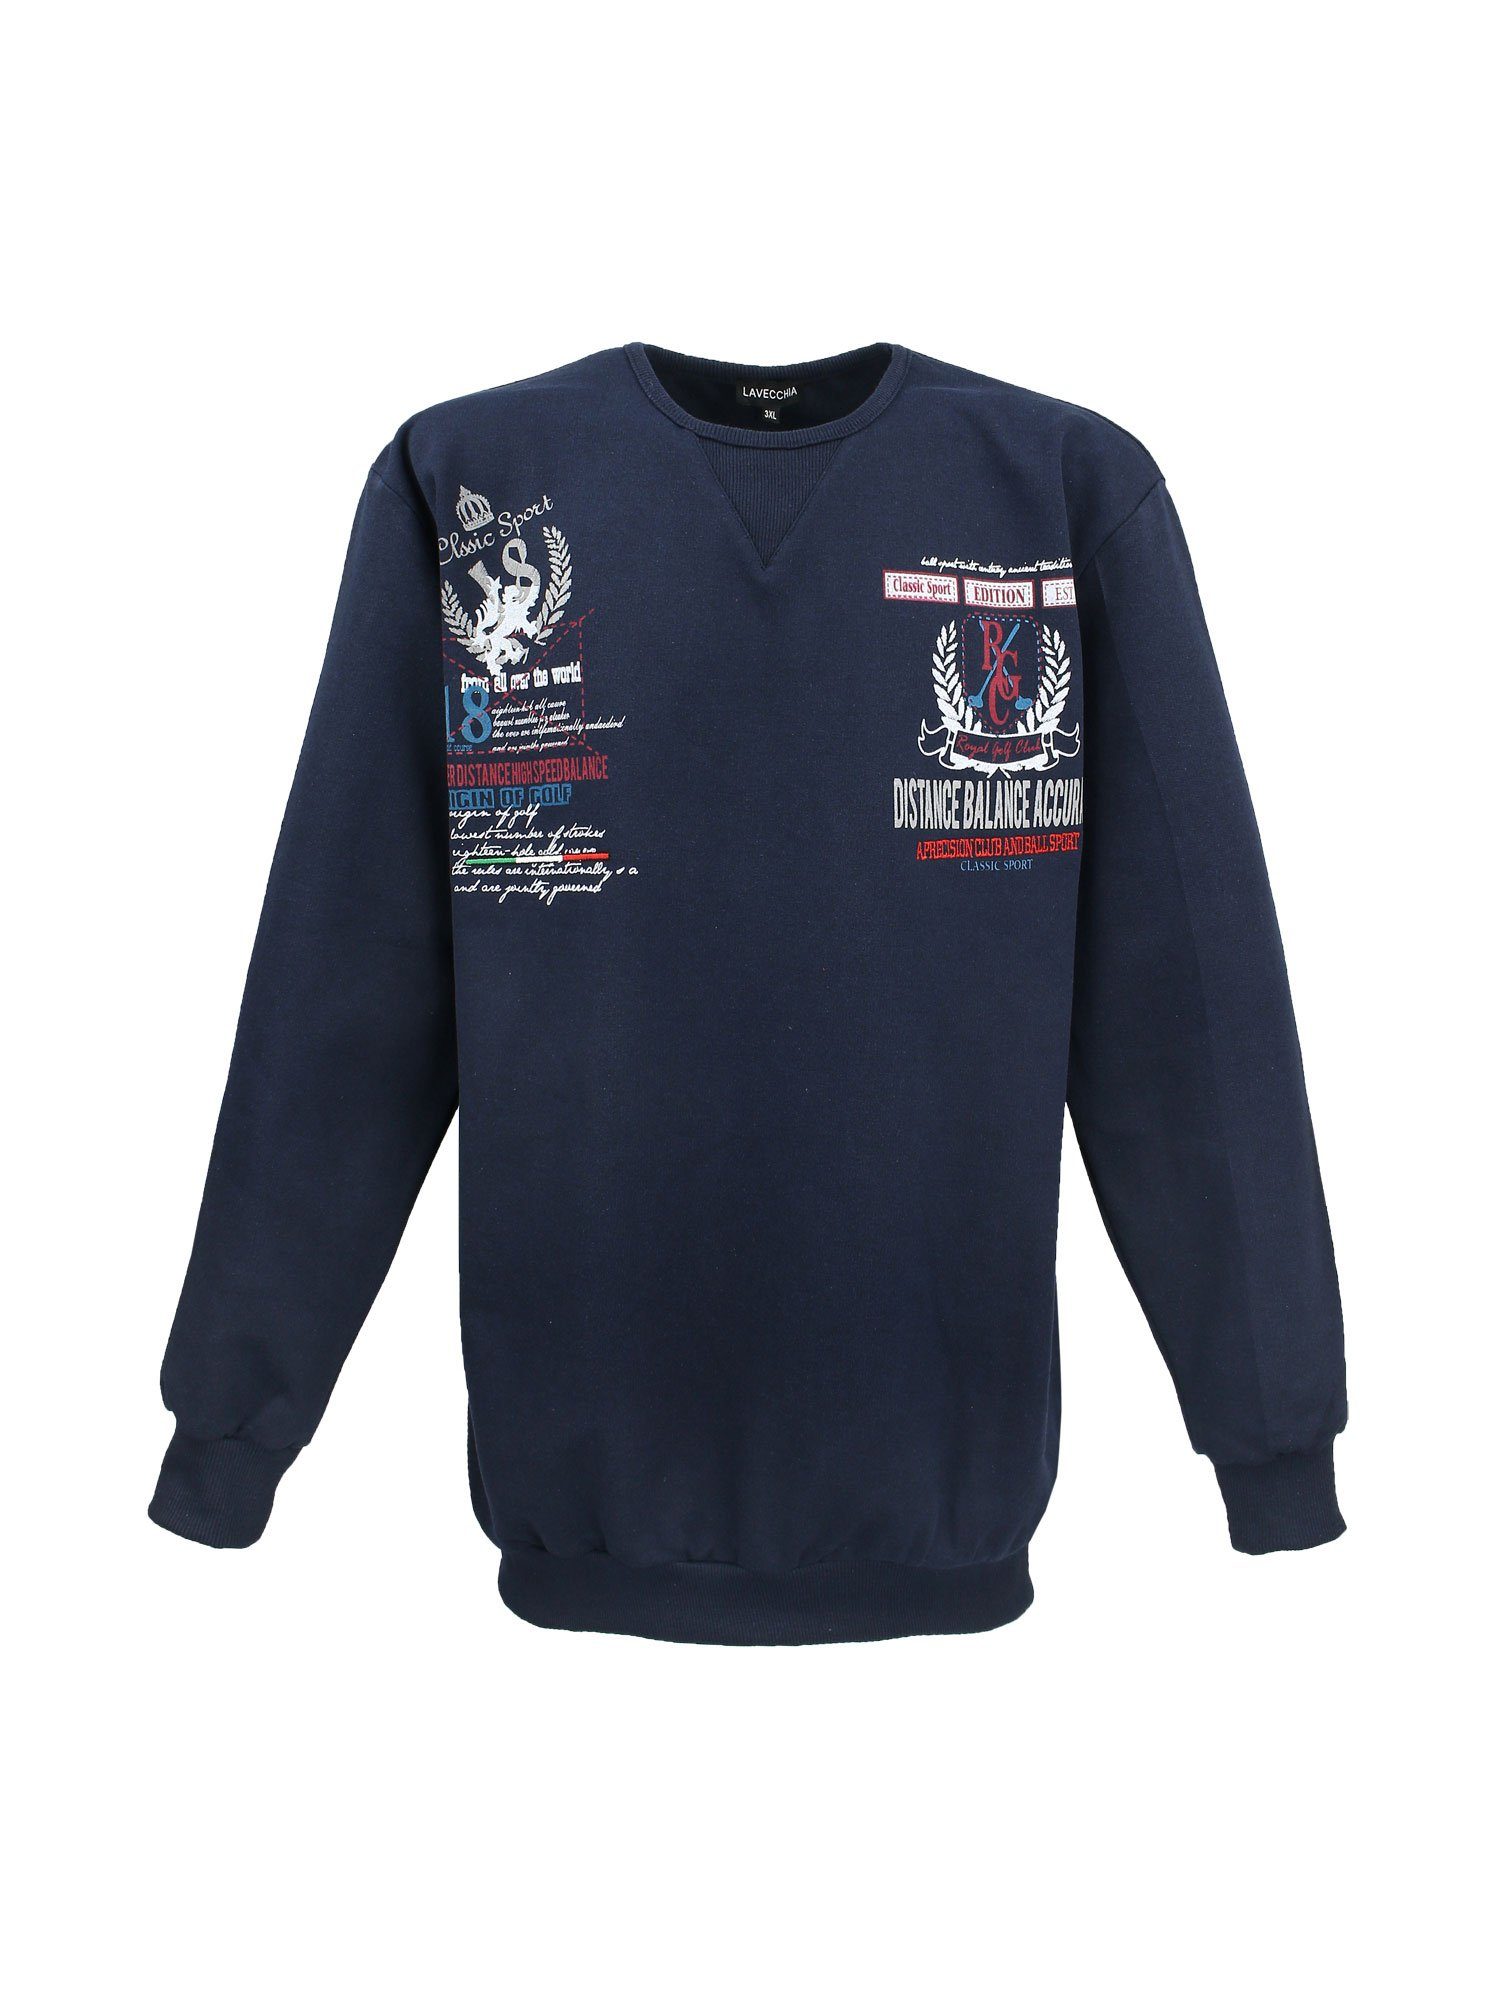 Lavecchia Sweatshirt Übergrößen Sweater LV-603 Sweat Pulli Pullover navy